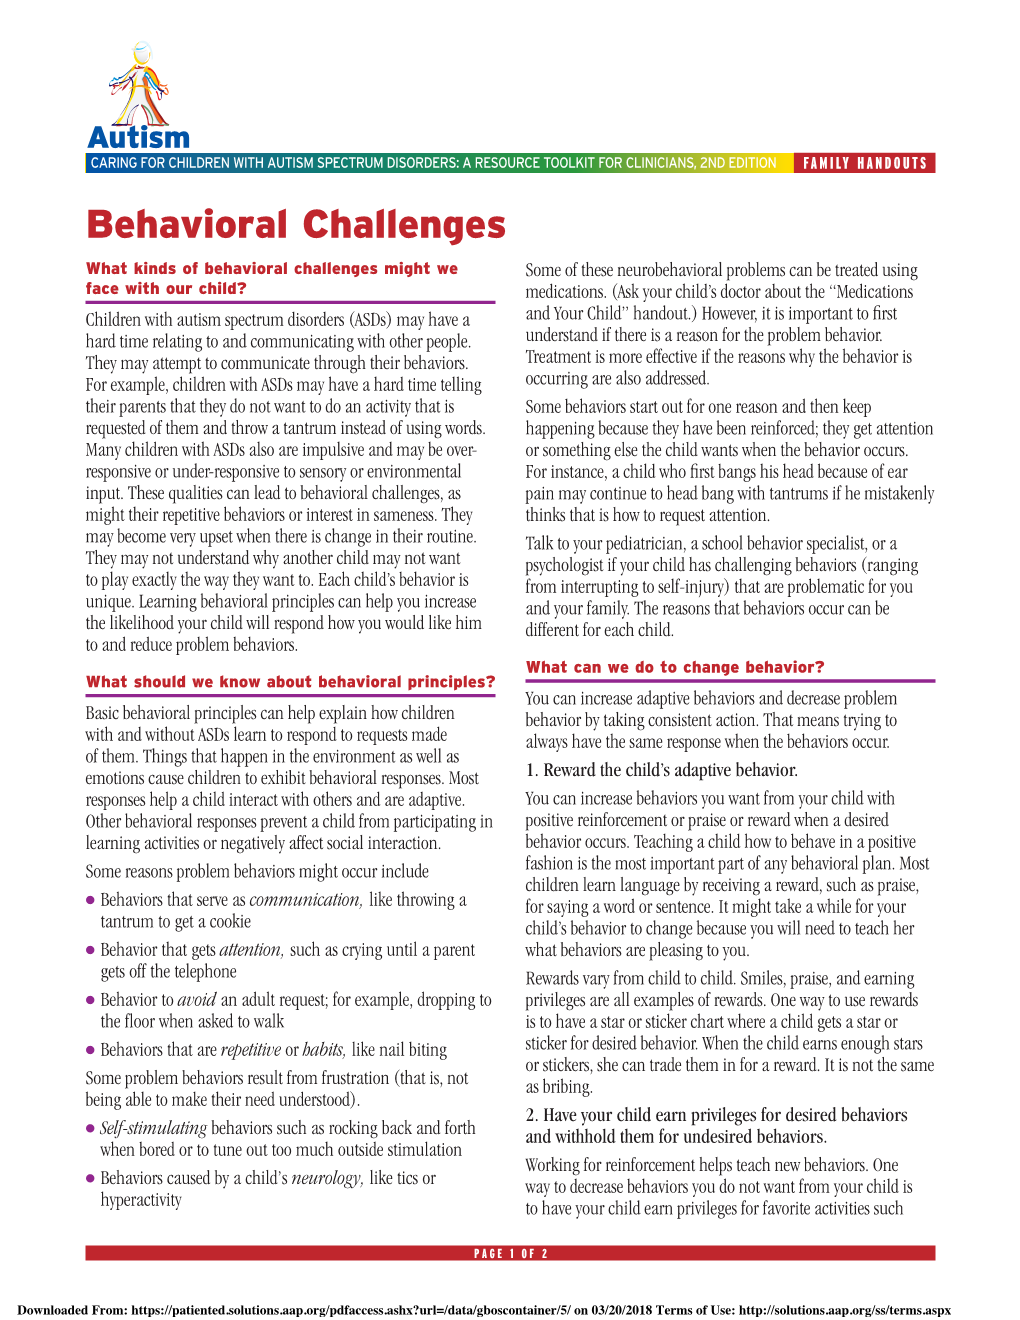 Autism-Behavior-Challenges.Pdf